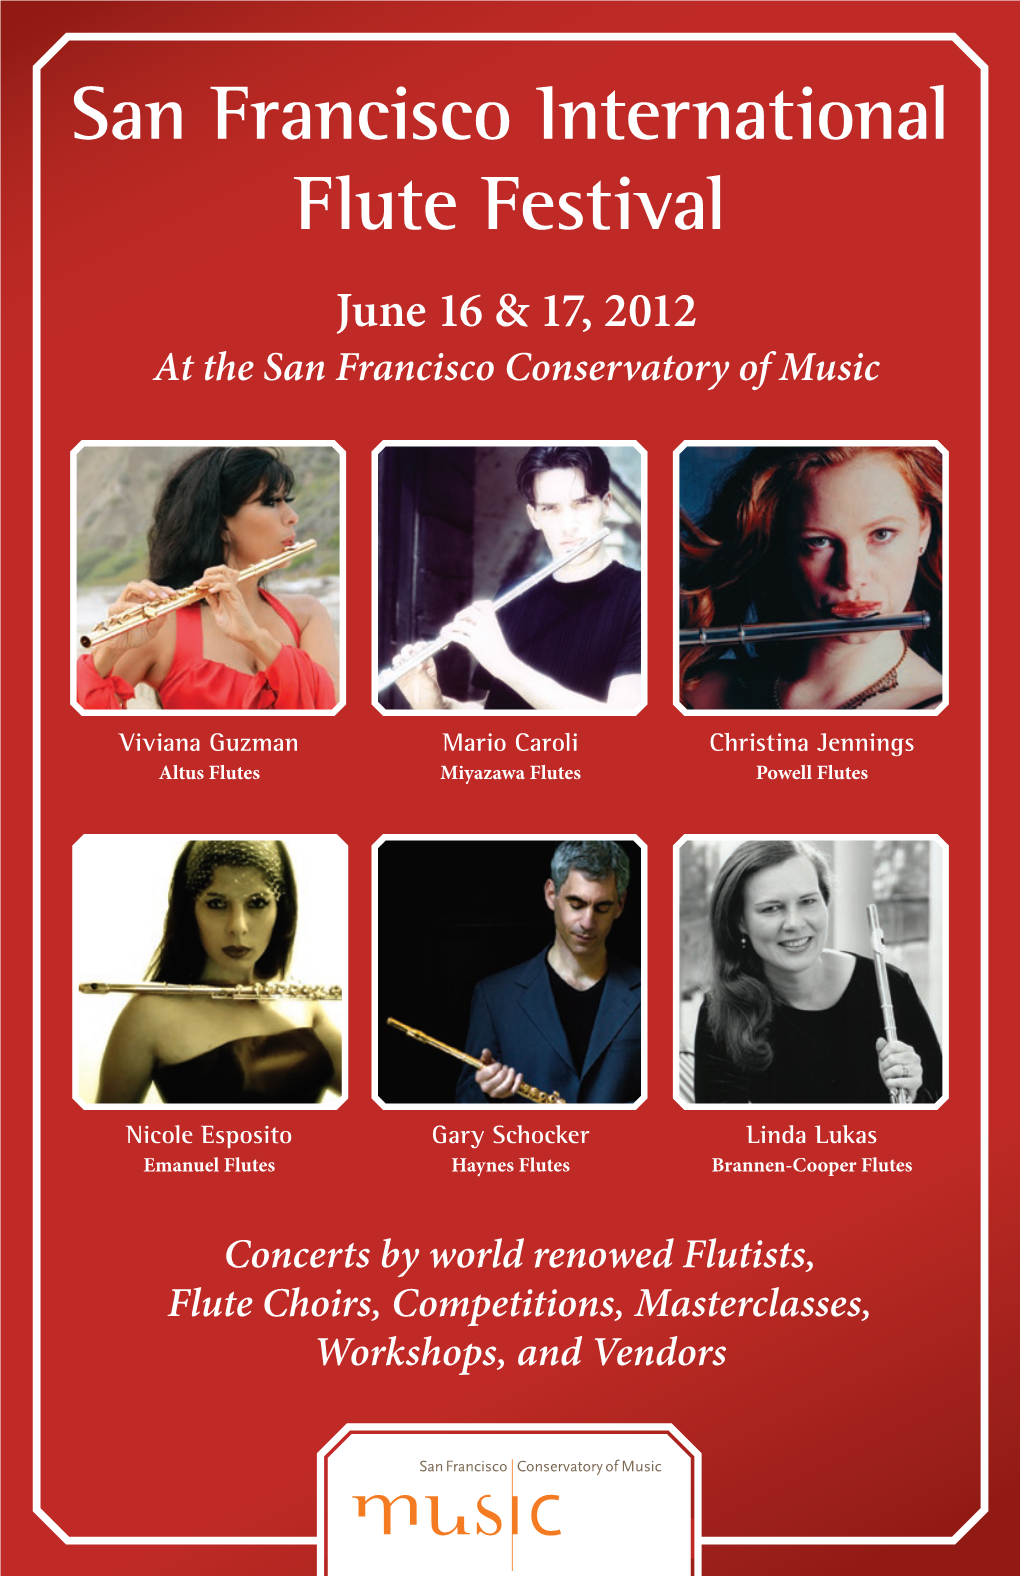 San Francisco International Flute Festival June 16 & 17, 2012 at the San Francisco Conservatory of Music